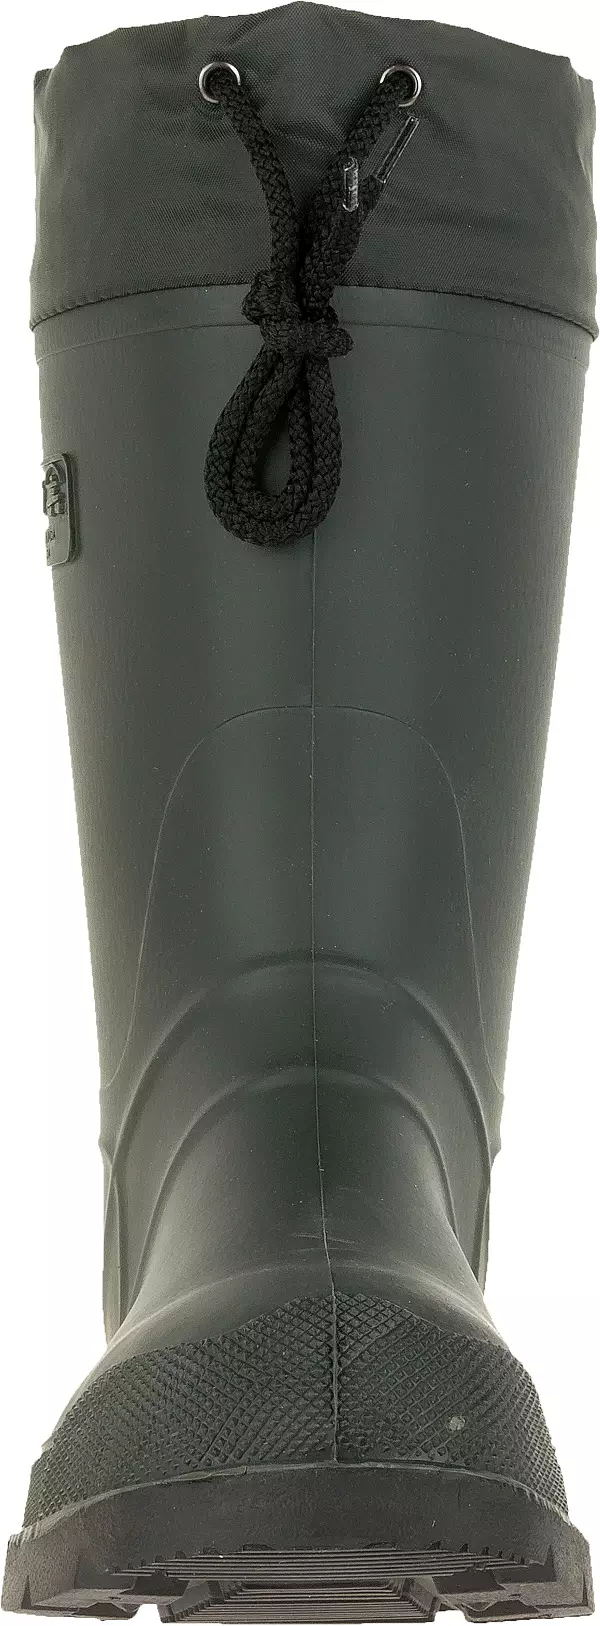 Kamik Forester Rubber Boots for Men